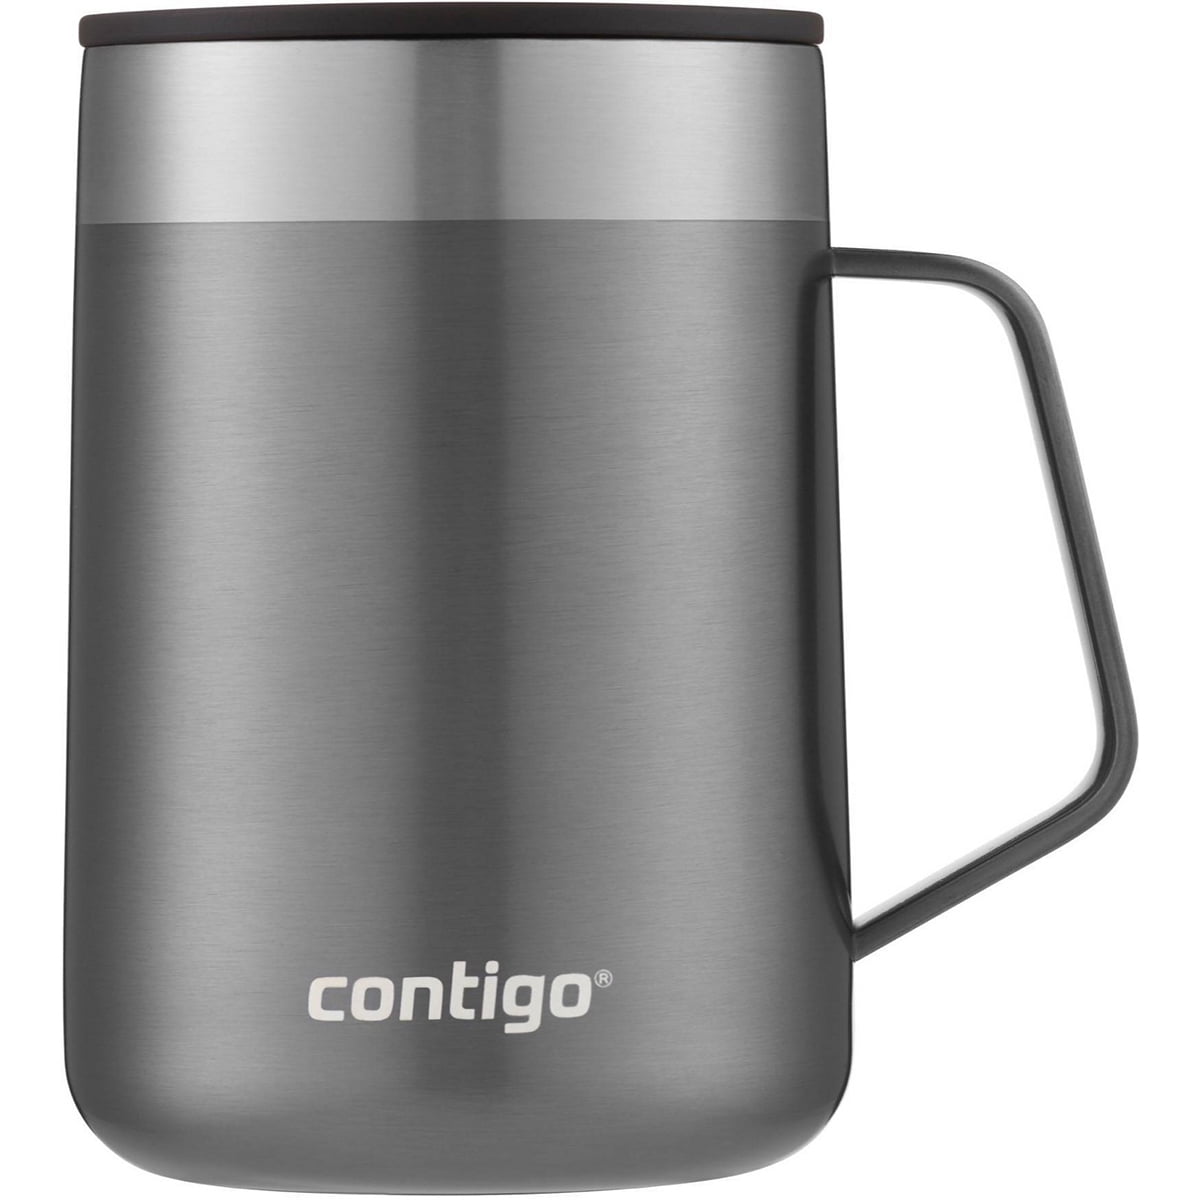 Contigo 2-Pack Stainless Steel Travel Mug $24.10 (Reg. $29) - $12.05 each -  Fabulessly Frugal